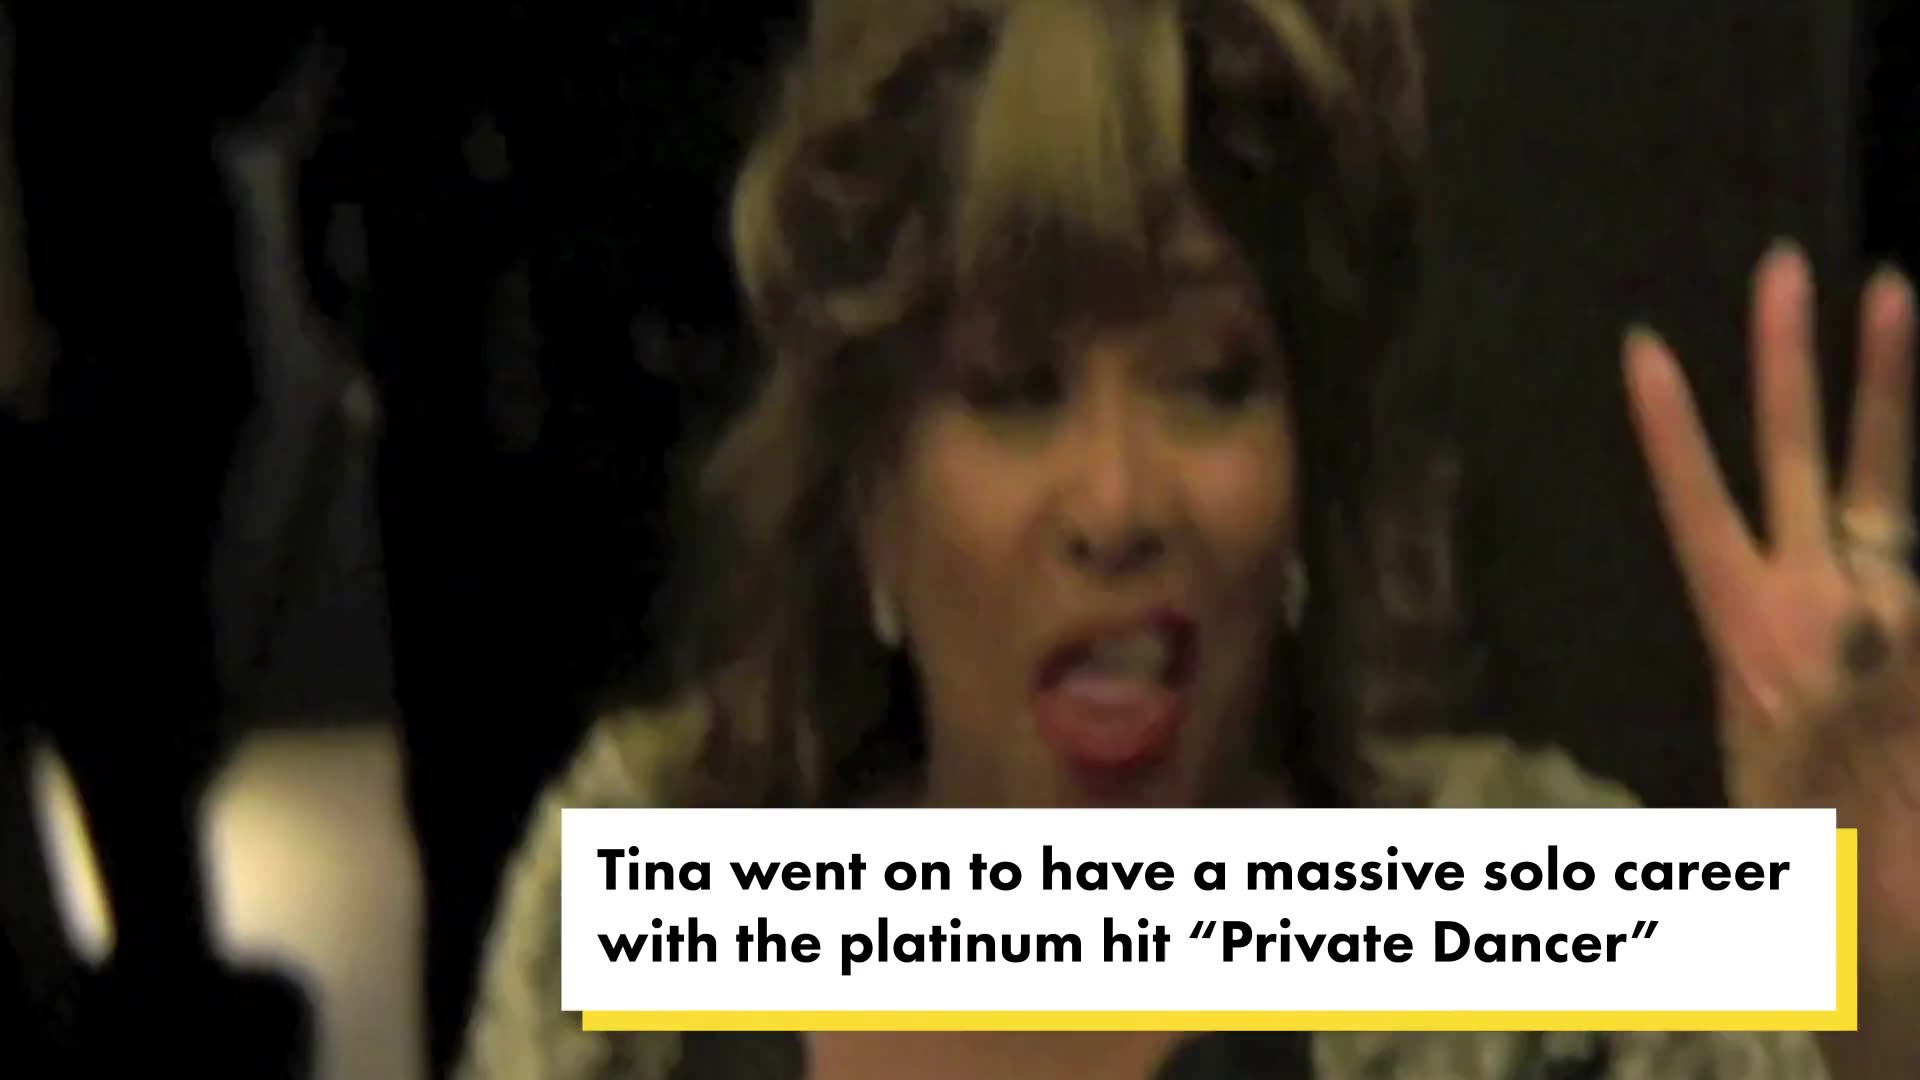 Tina Turner, legendary 'Queen of Rock' dead at 83